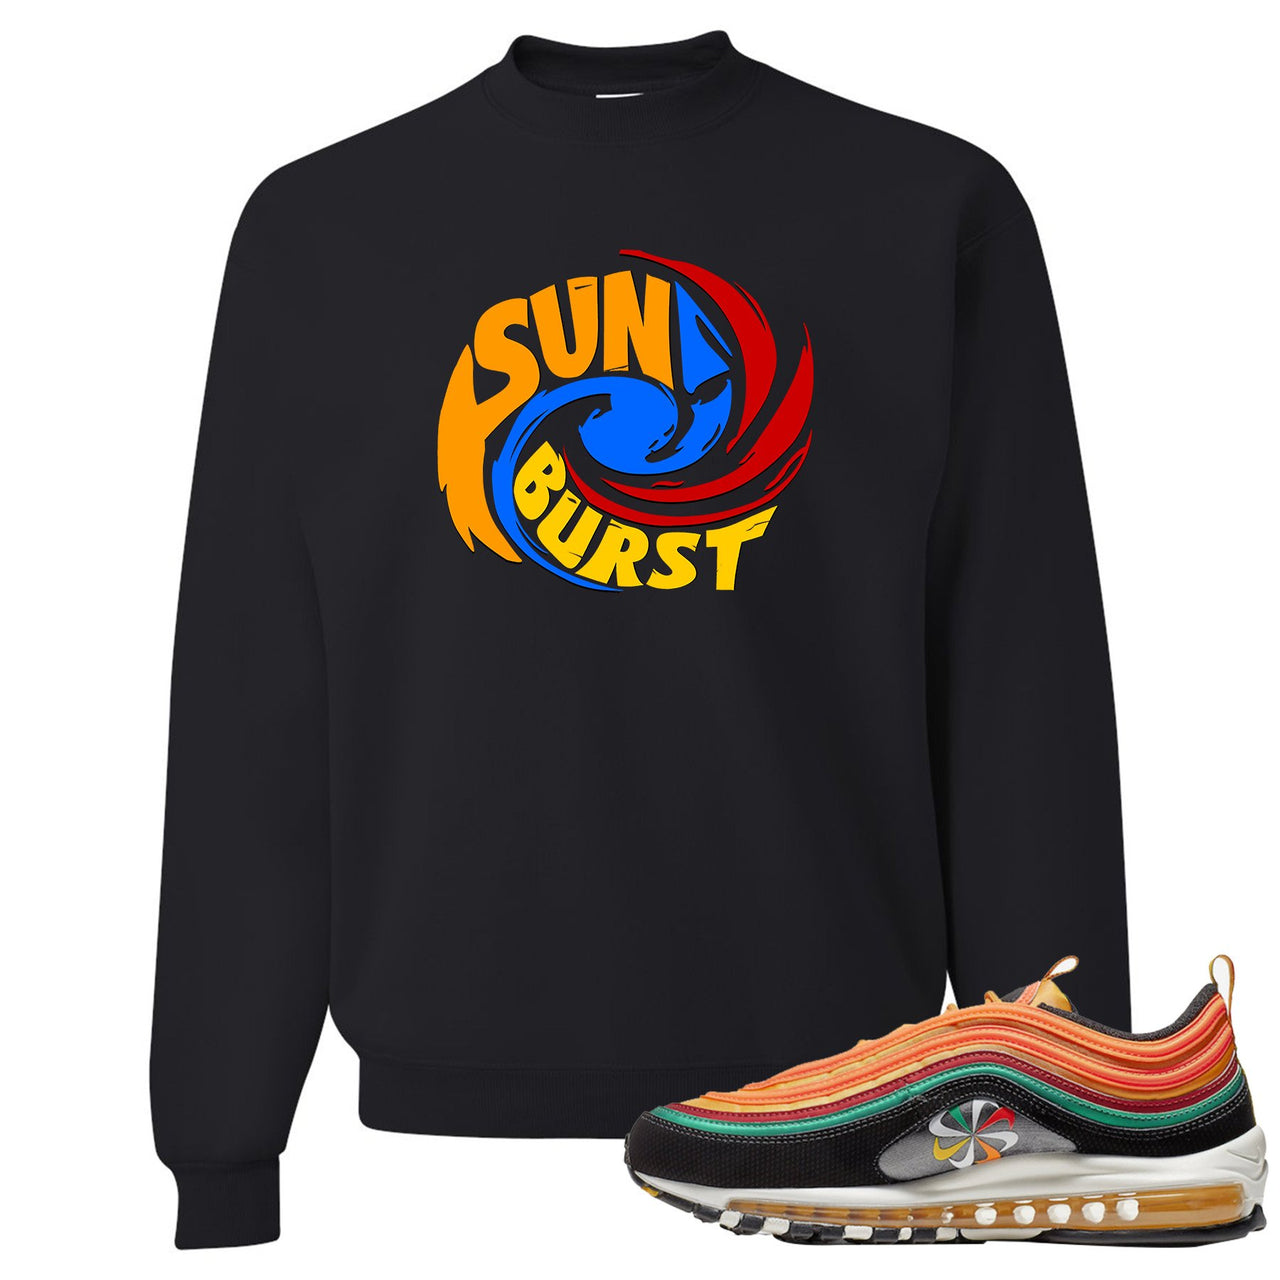 Printed on the front of the Air Max 97 Sunburst black sneaker matching crewneck sweatshirt is the Sunburst Hurricane logo